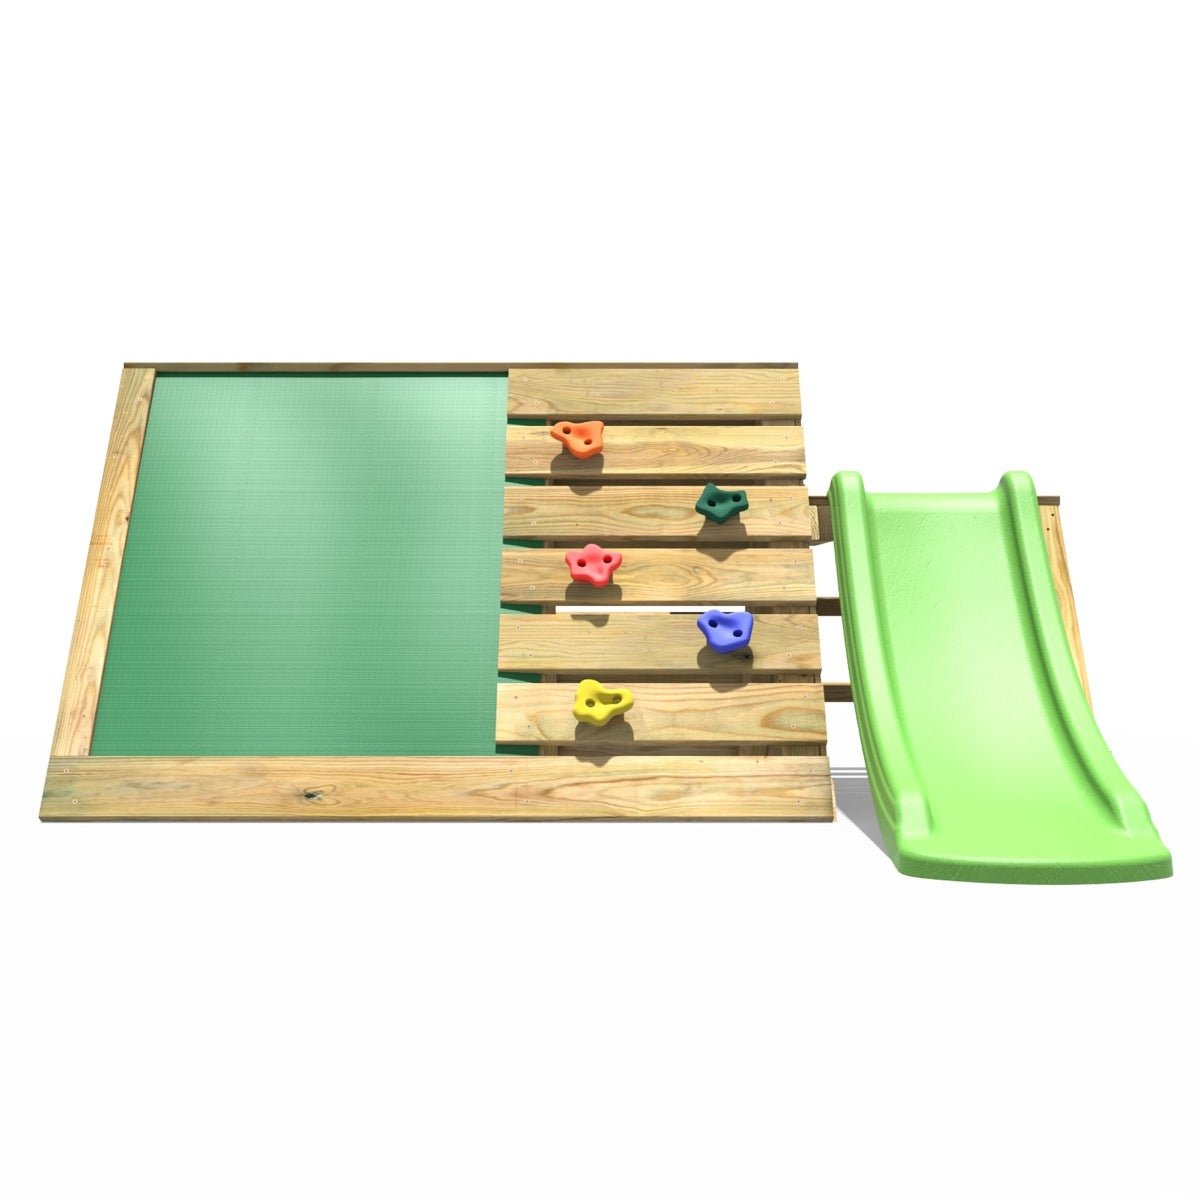 Rebo Mini Wooden Climbing Pyramid Adventure Playset + Den & Slide - Green